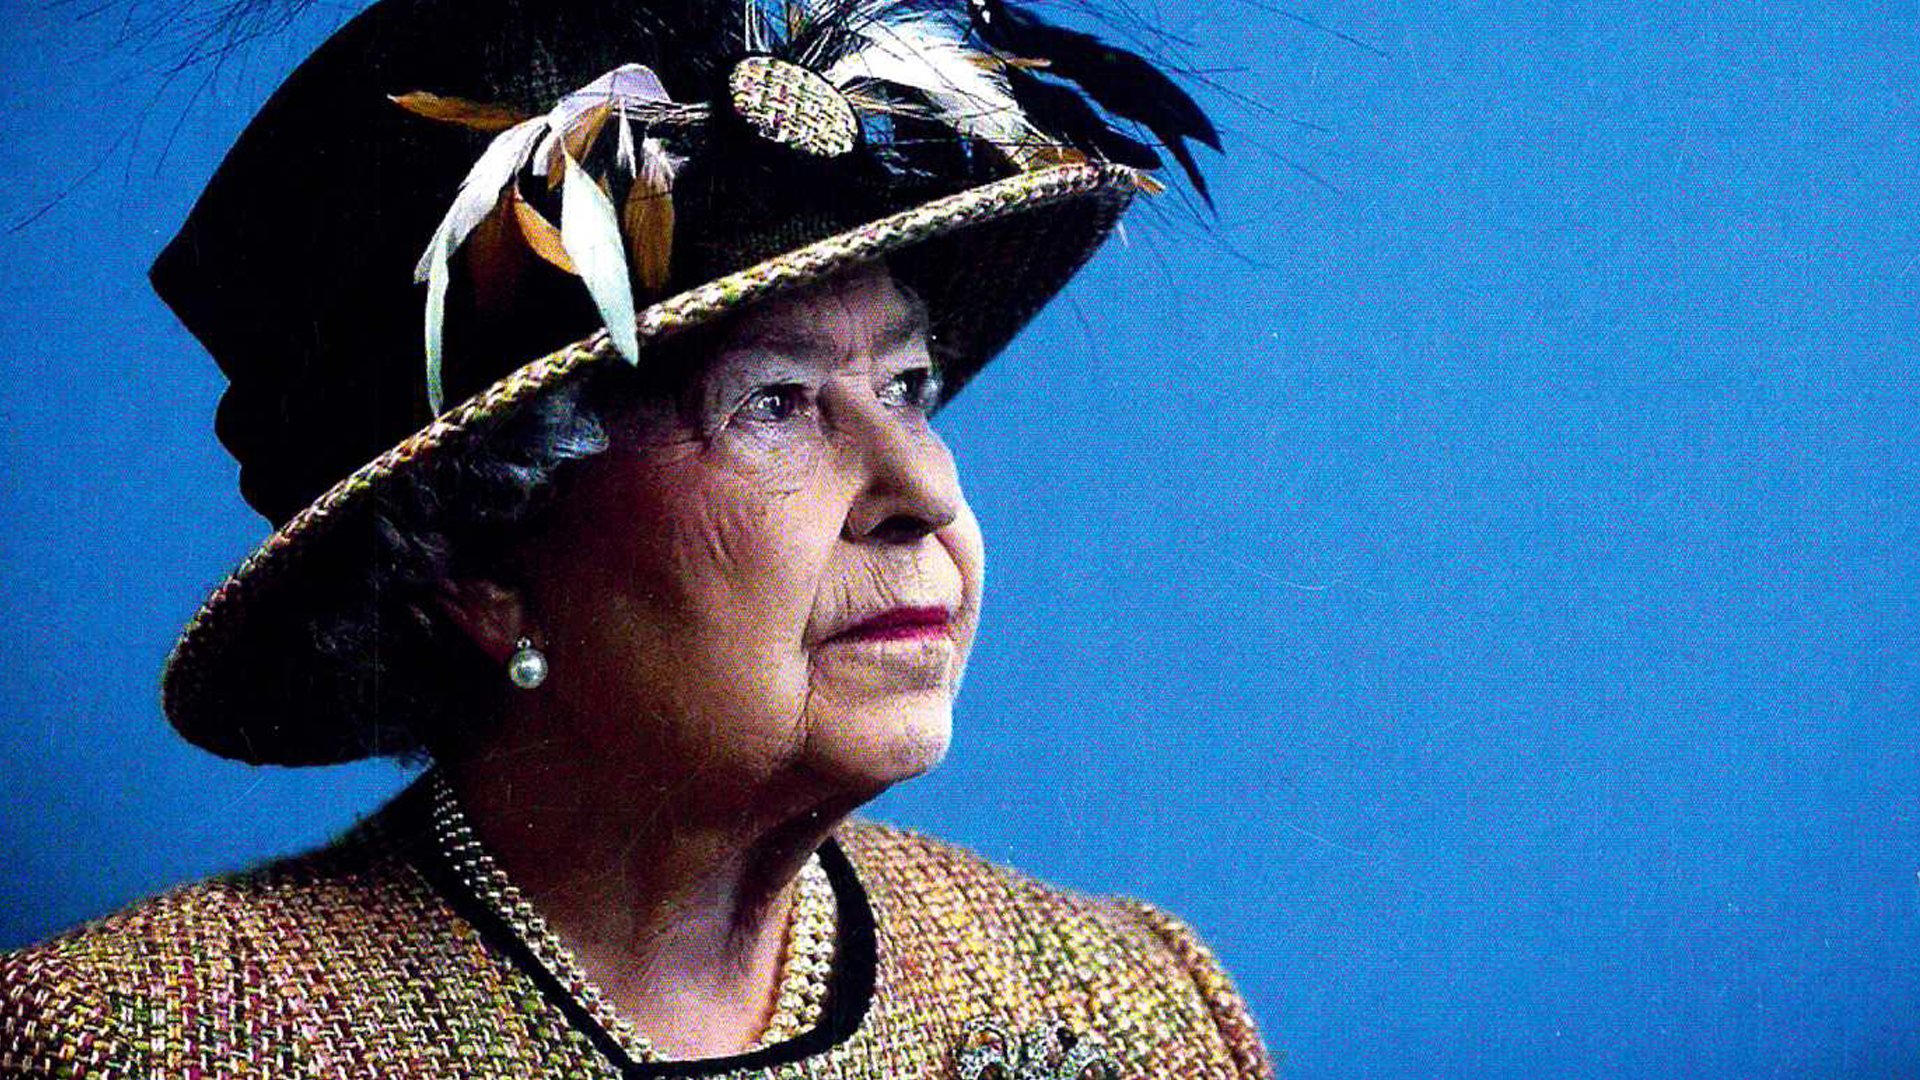 Queen Elizabeth II was Britain's longest serving monarch. Photo courtesy of Wikimedia Commons.